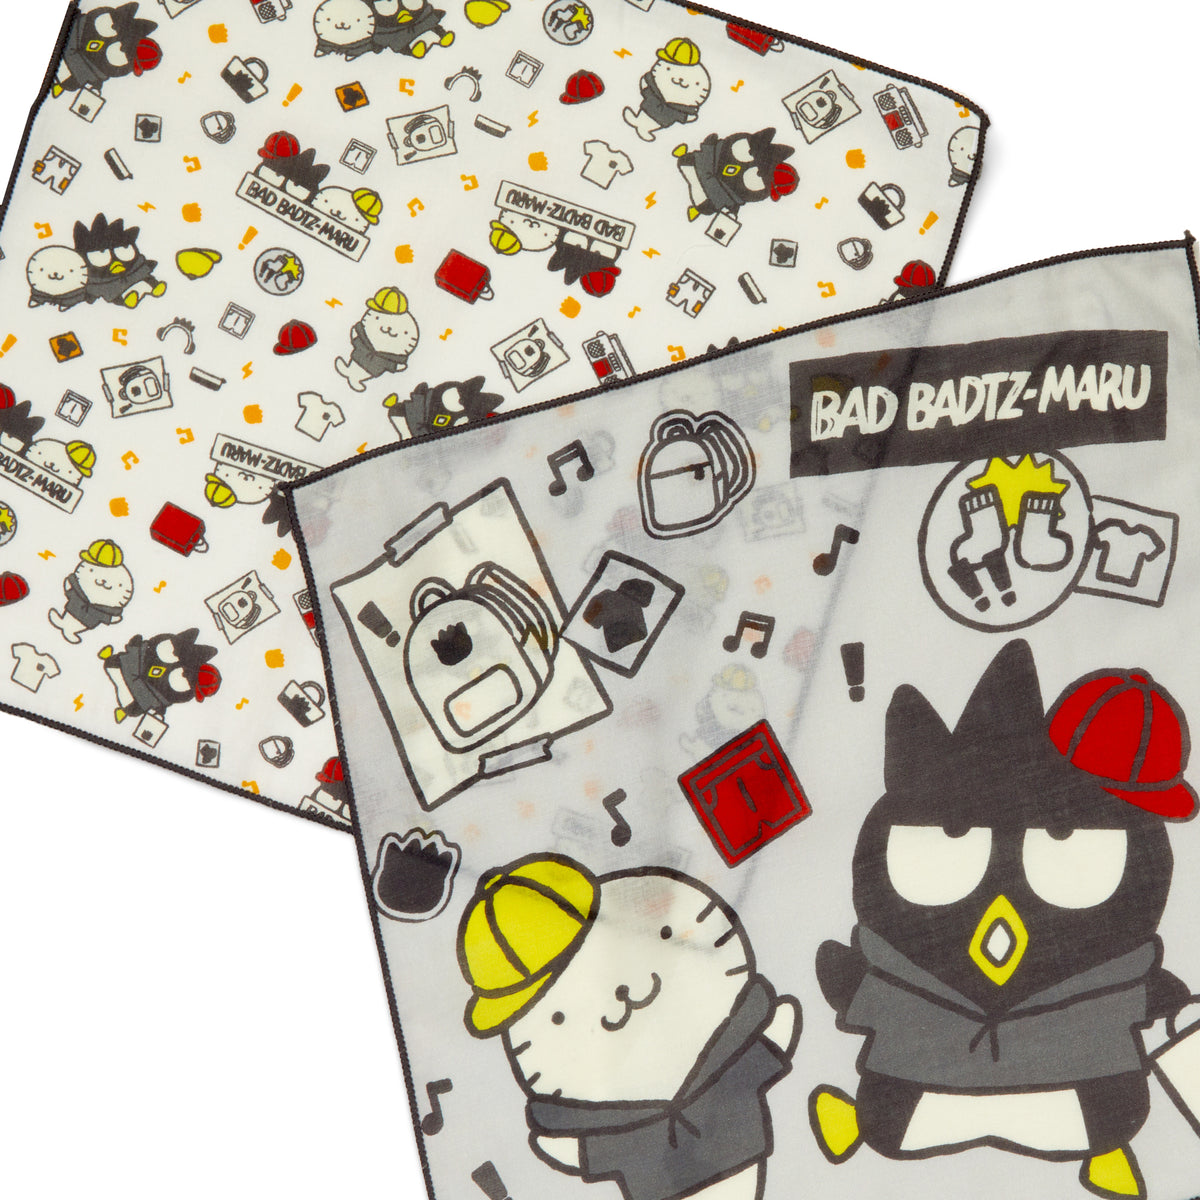 Badtz-maru Handkerchief Set (Music Note Series) Accessory Global Original   